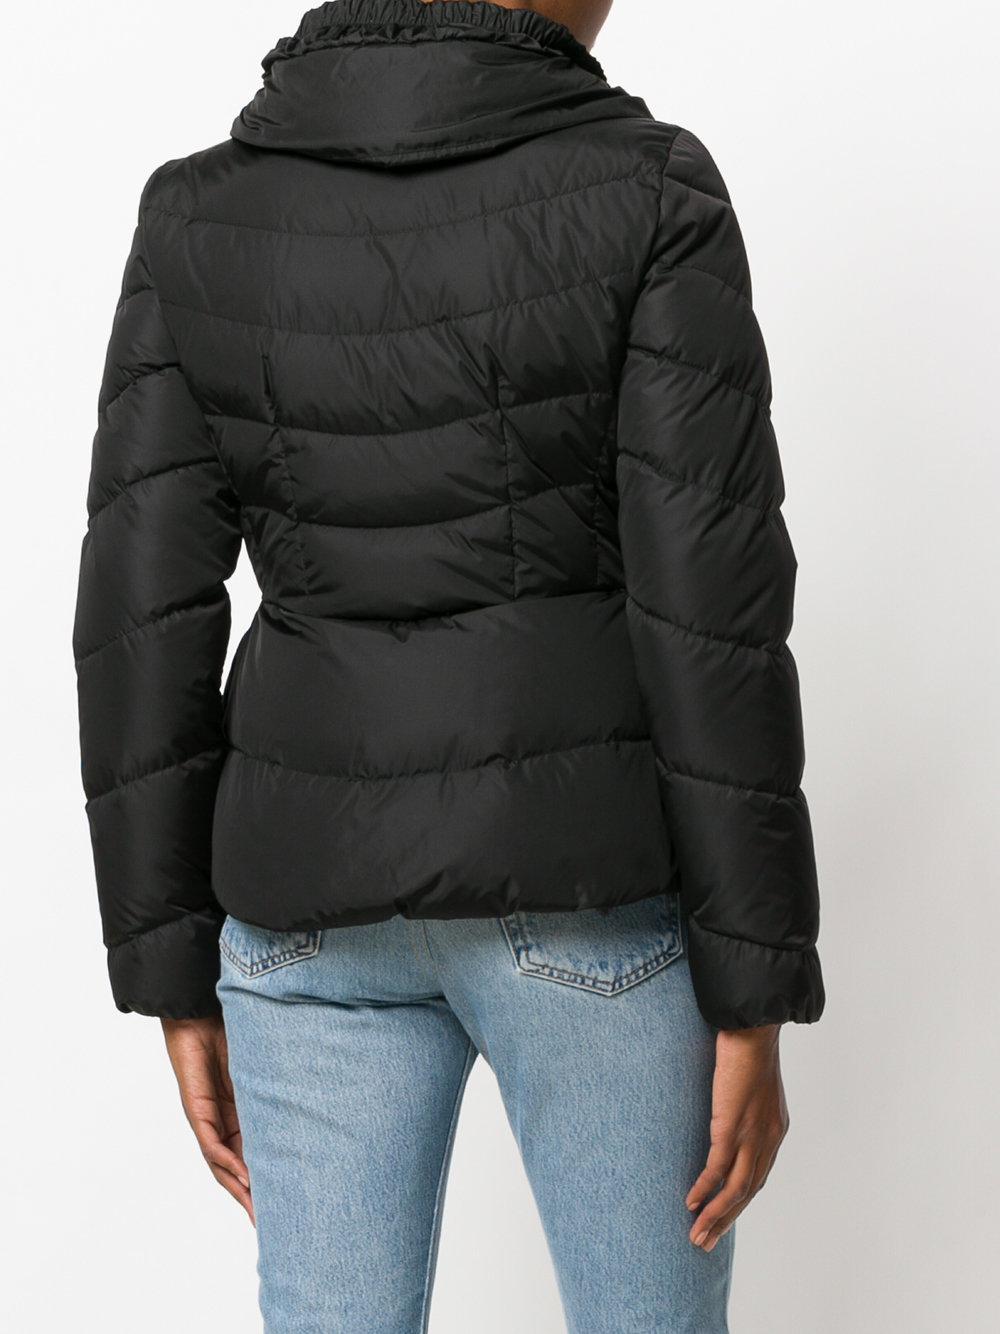 Moncler Synthetic Miriel Jacket in Black - Lyst